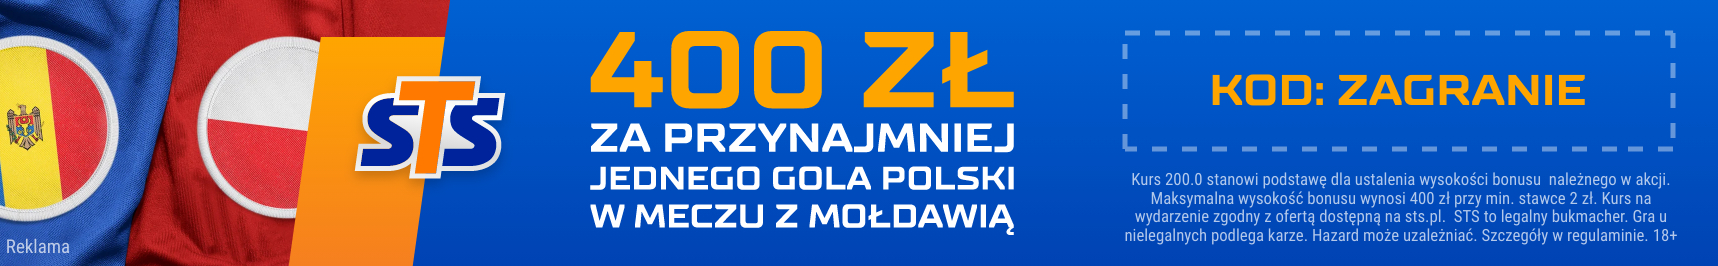 mołdawia polska bonus sts